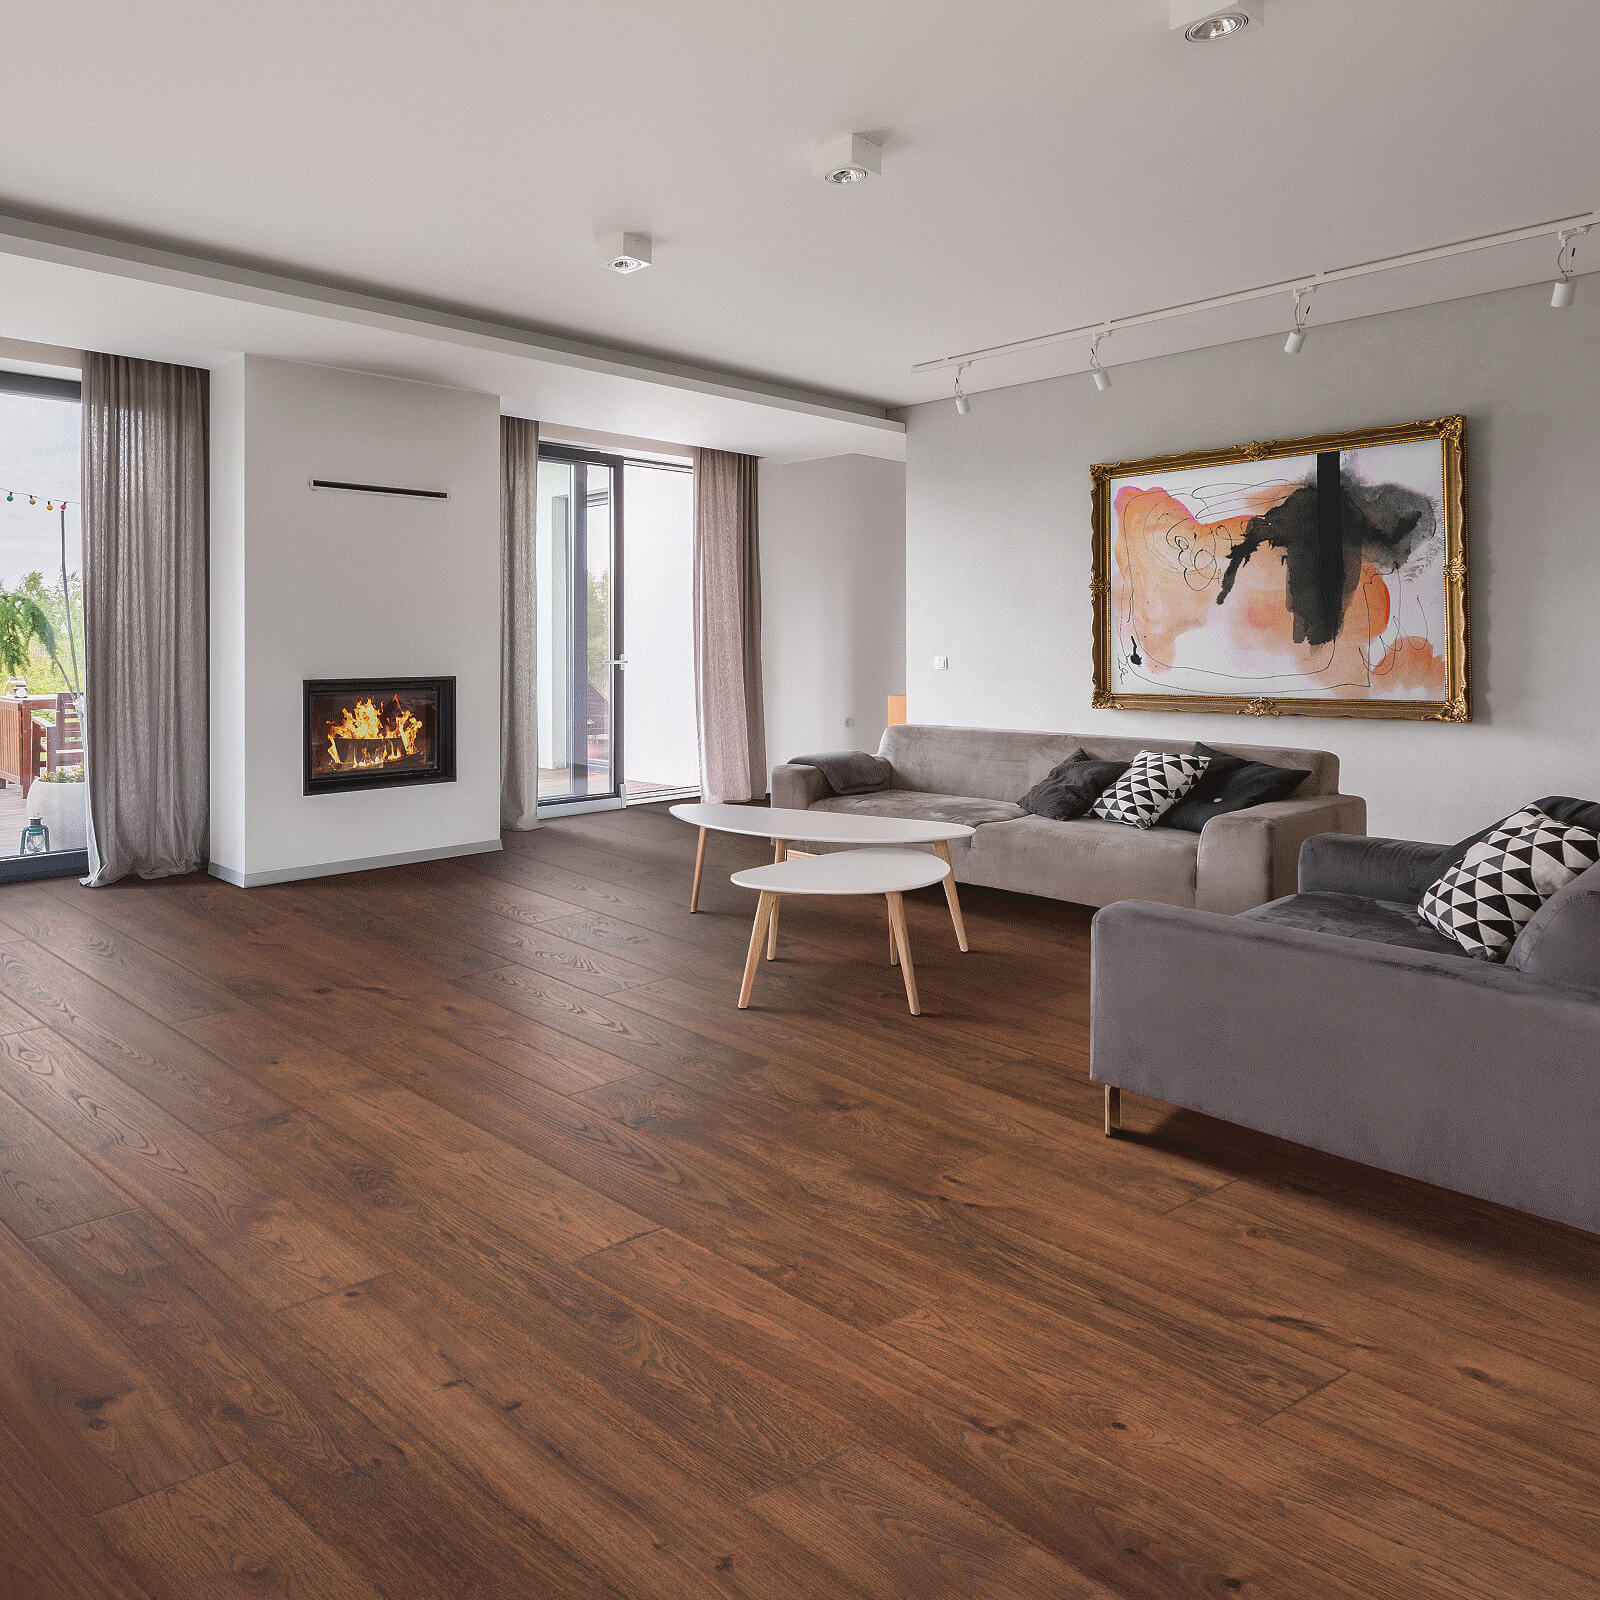 Laminate flooring in living room | Sterling Carpet and Flooring